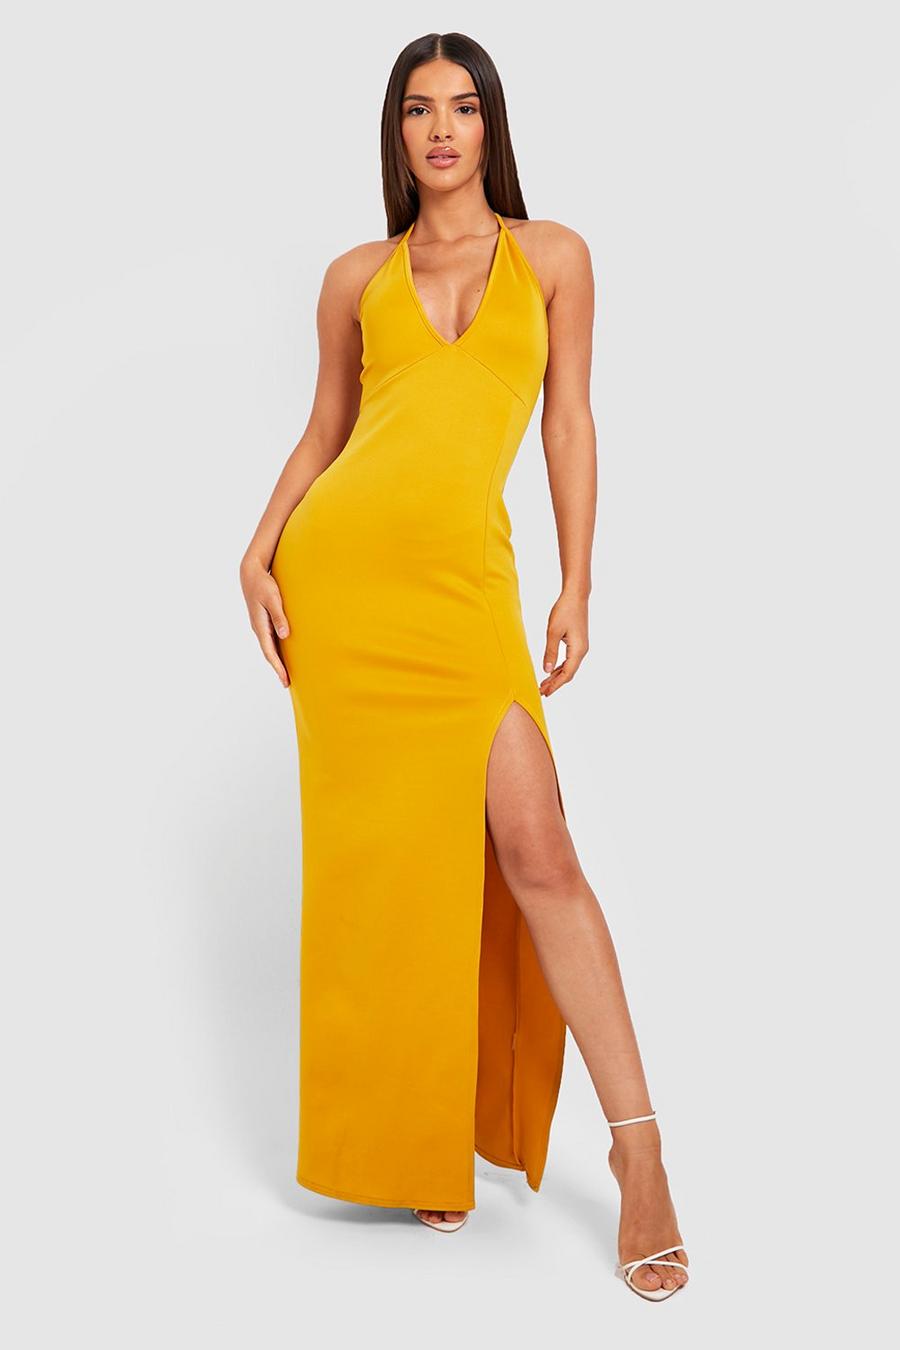 Mustard yellow Scuba Strappy Slip Dress